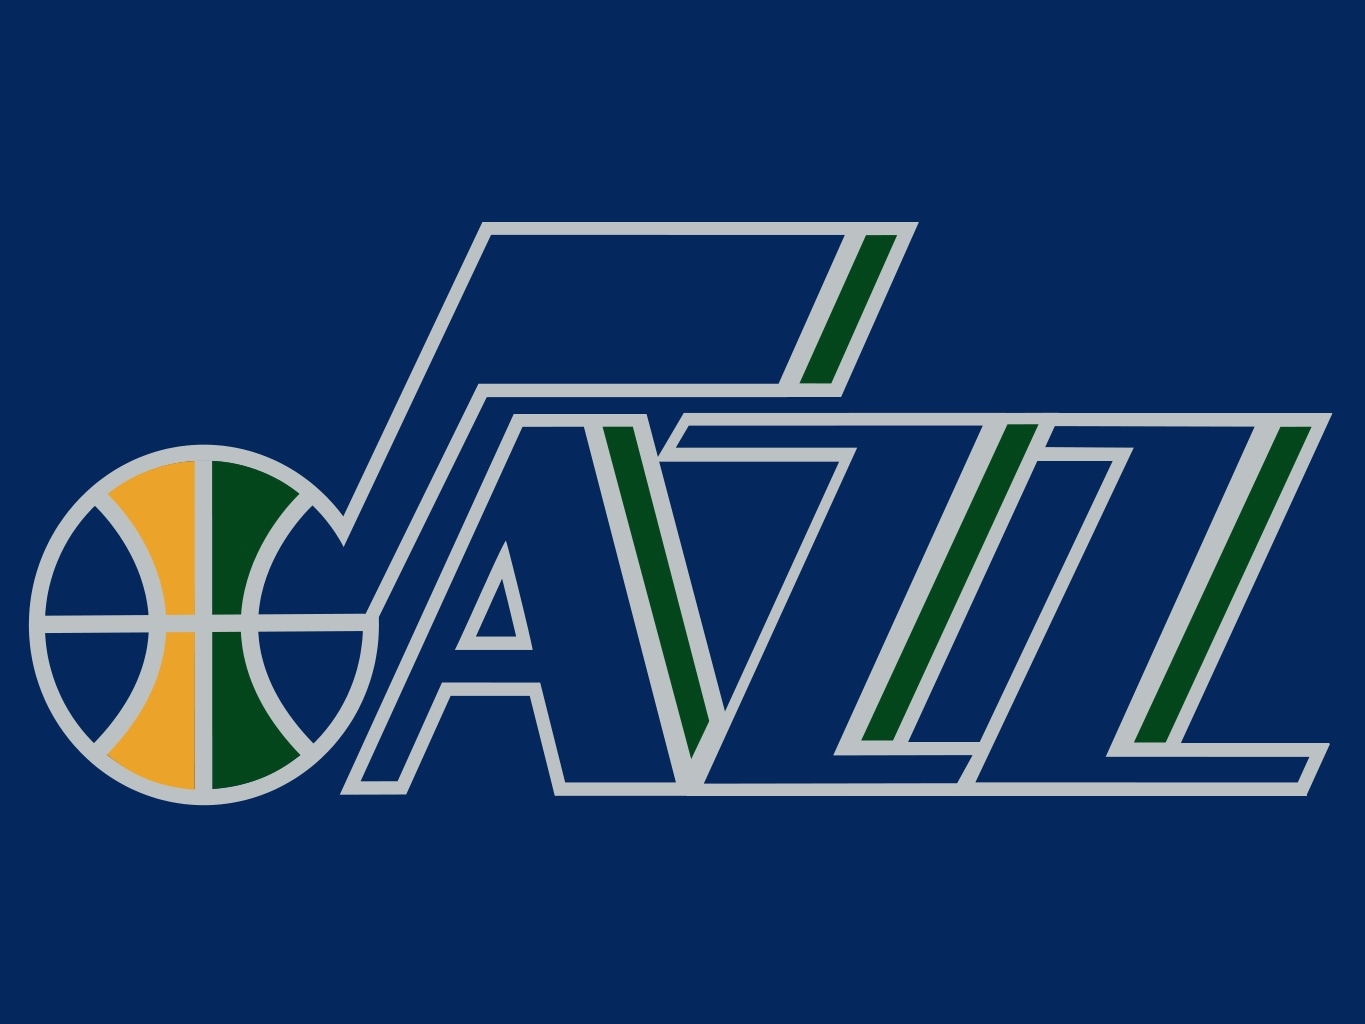 Utah Jazz   Wikipedia the free encyclopedia   HD Wallpapers